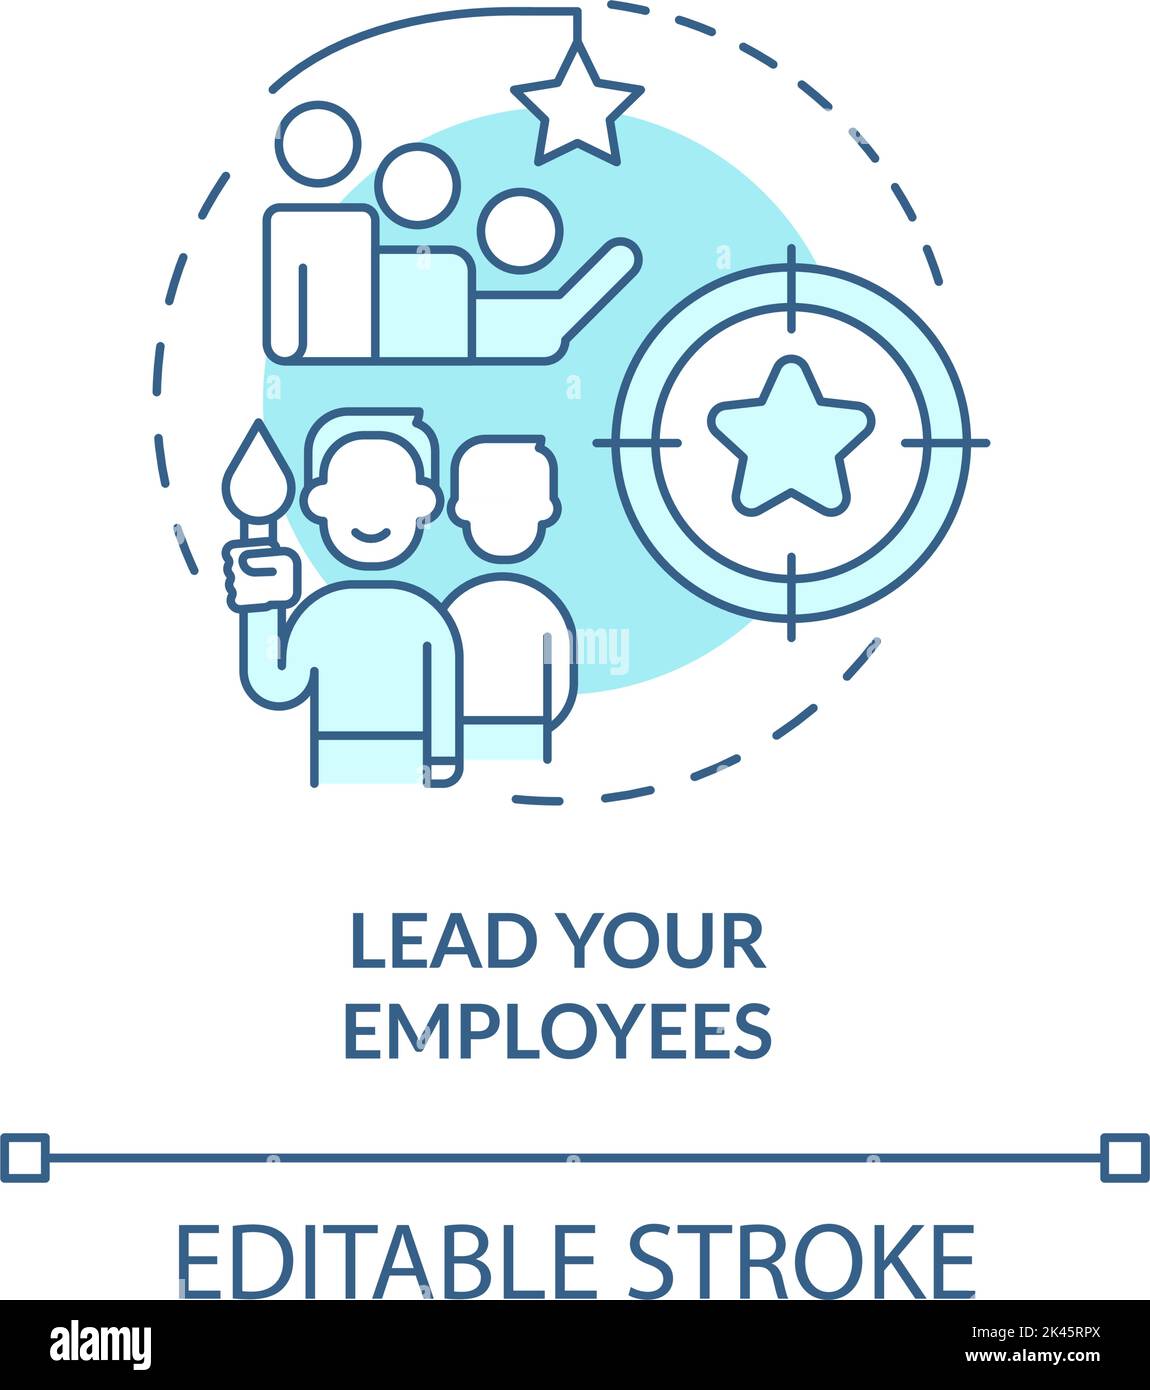 Mentoring your employees blue concept icon Stock Vector